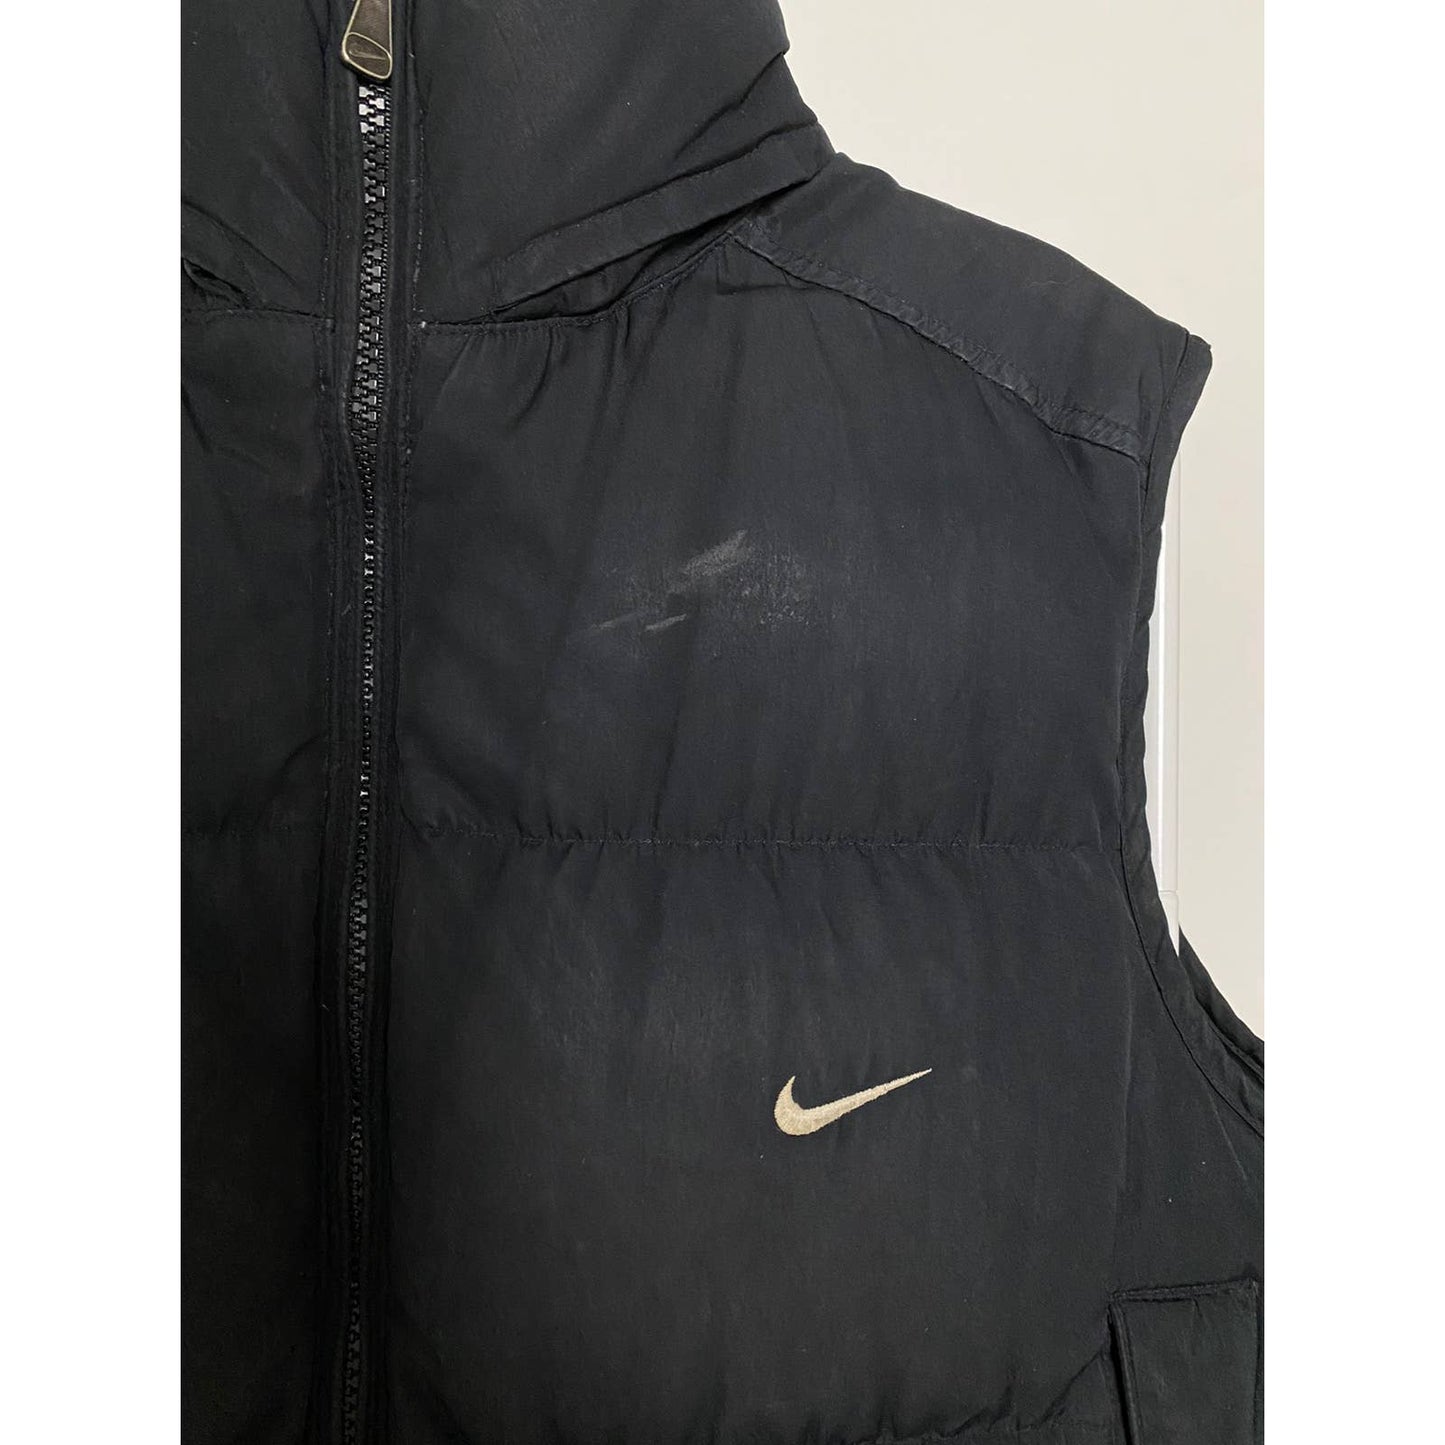 Nike vintage black puffer vest small swoosh 2000s